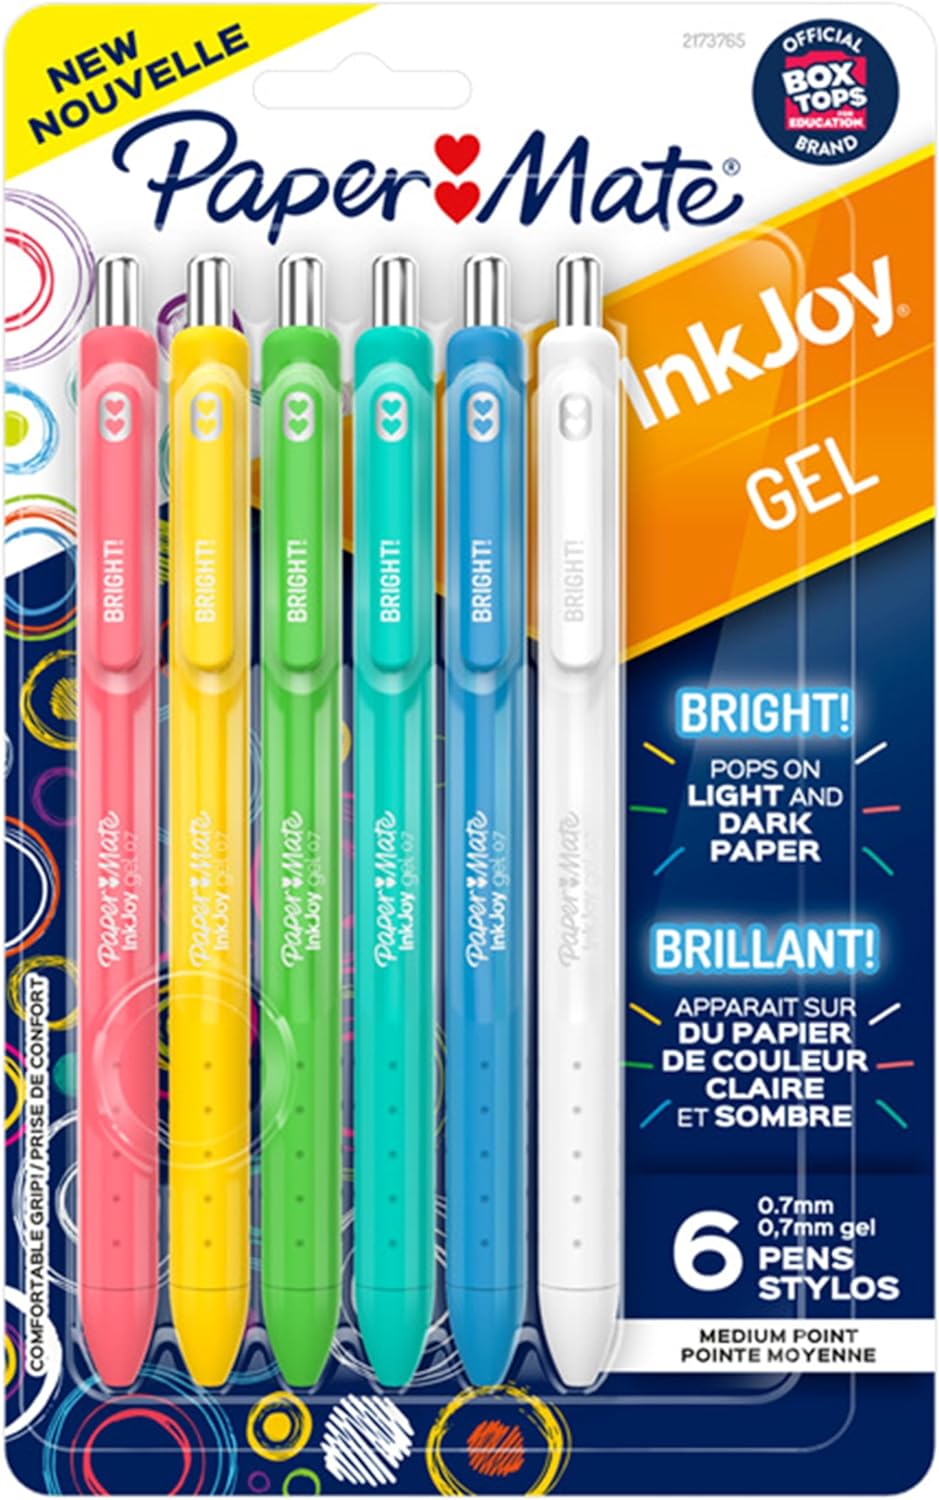 Paper Mate Inkjoy Gel Bright! Pens